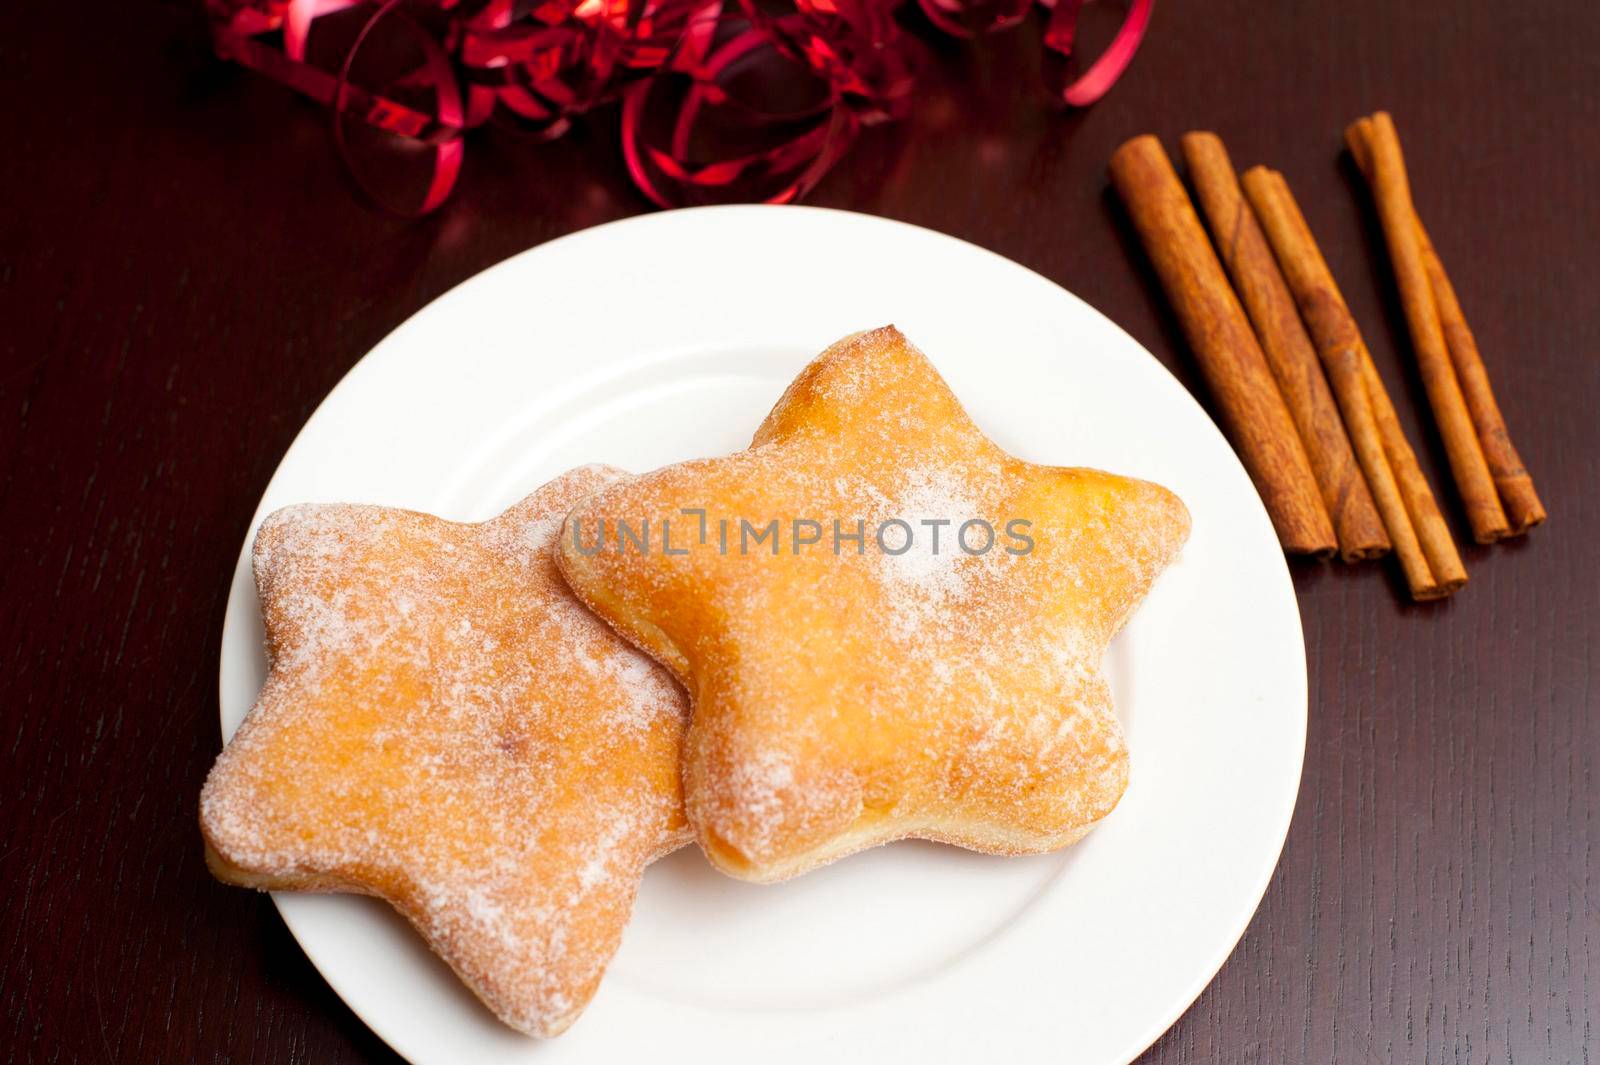 Star shaped doughnuts by sanisra